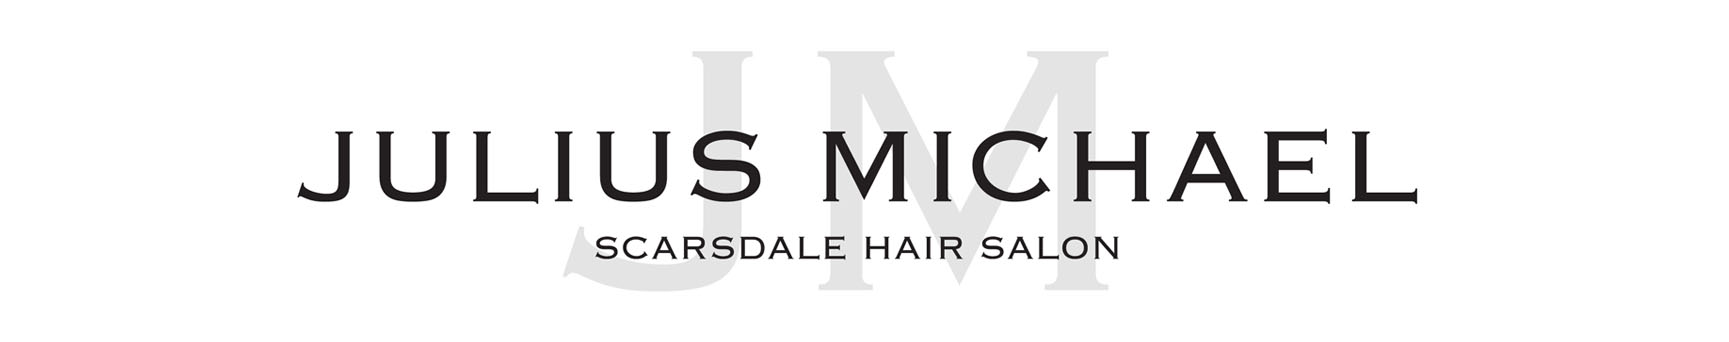 Julius Michael Scarsdale Hair Salon